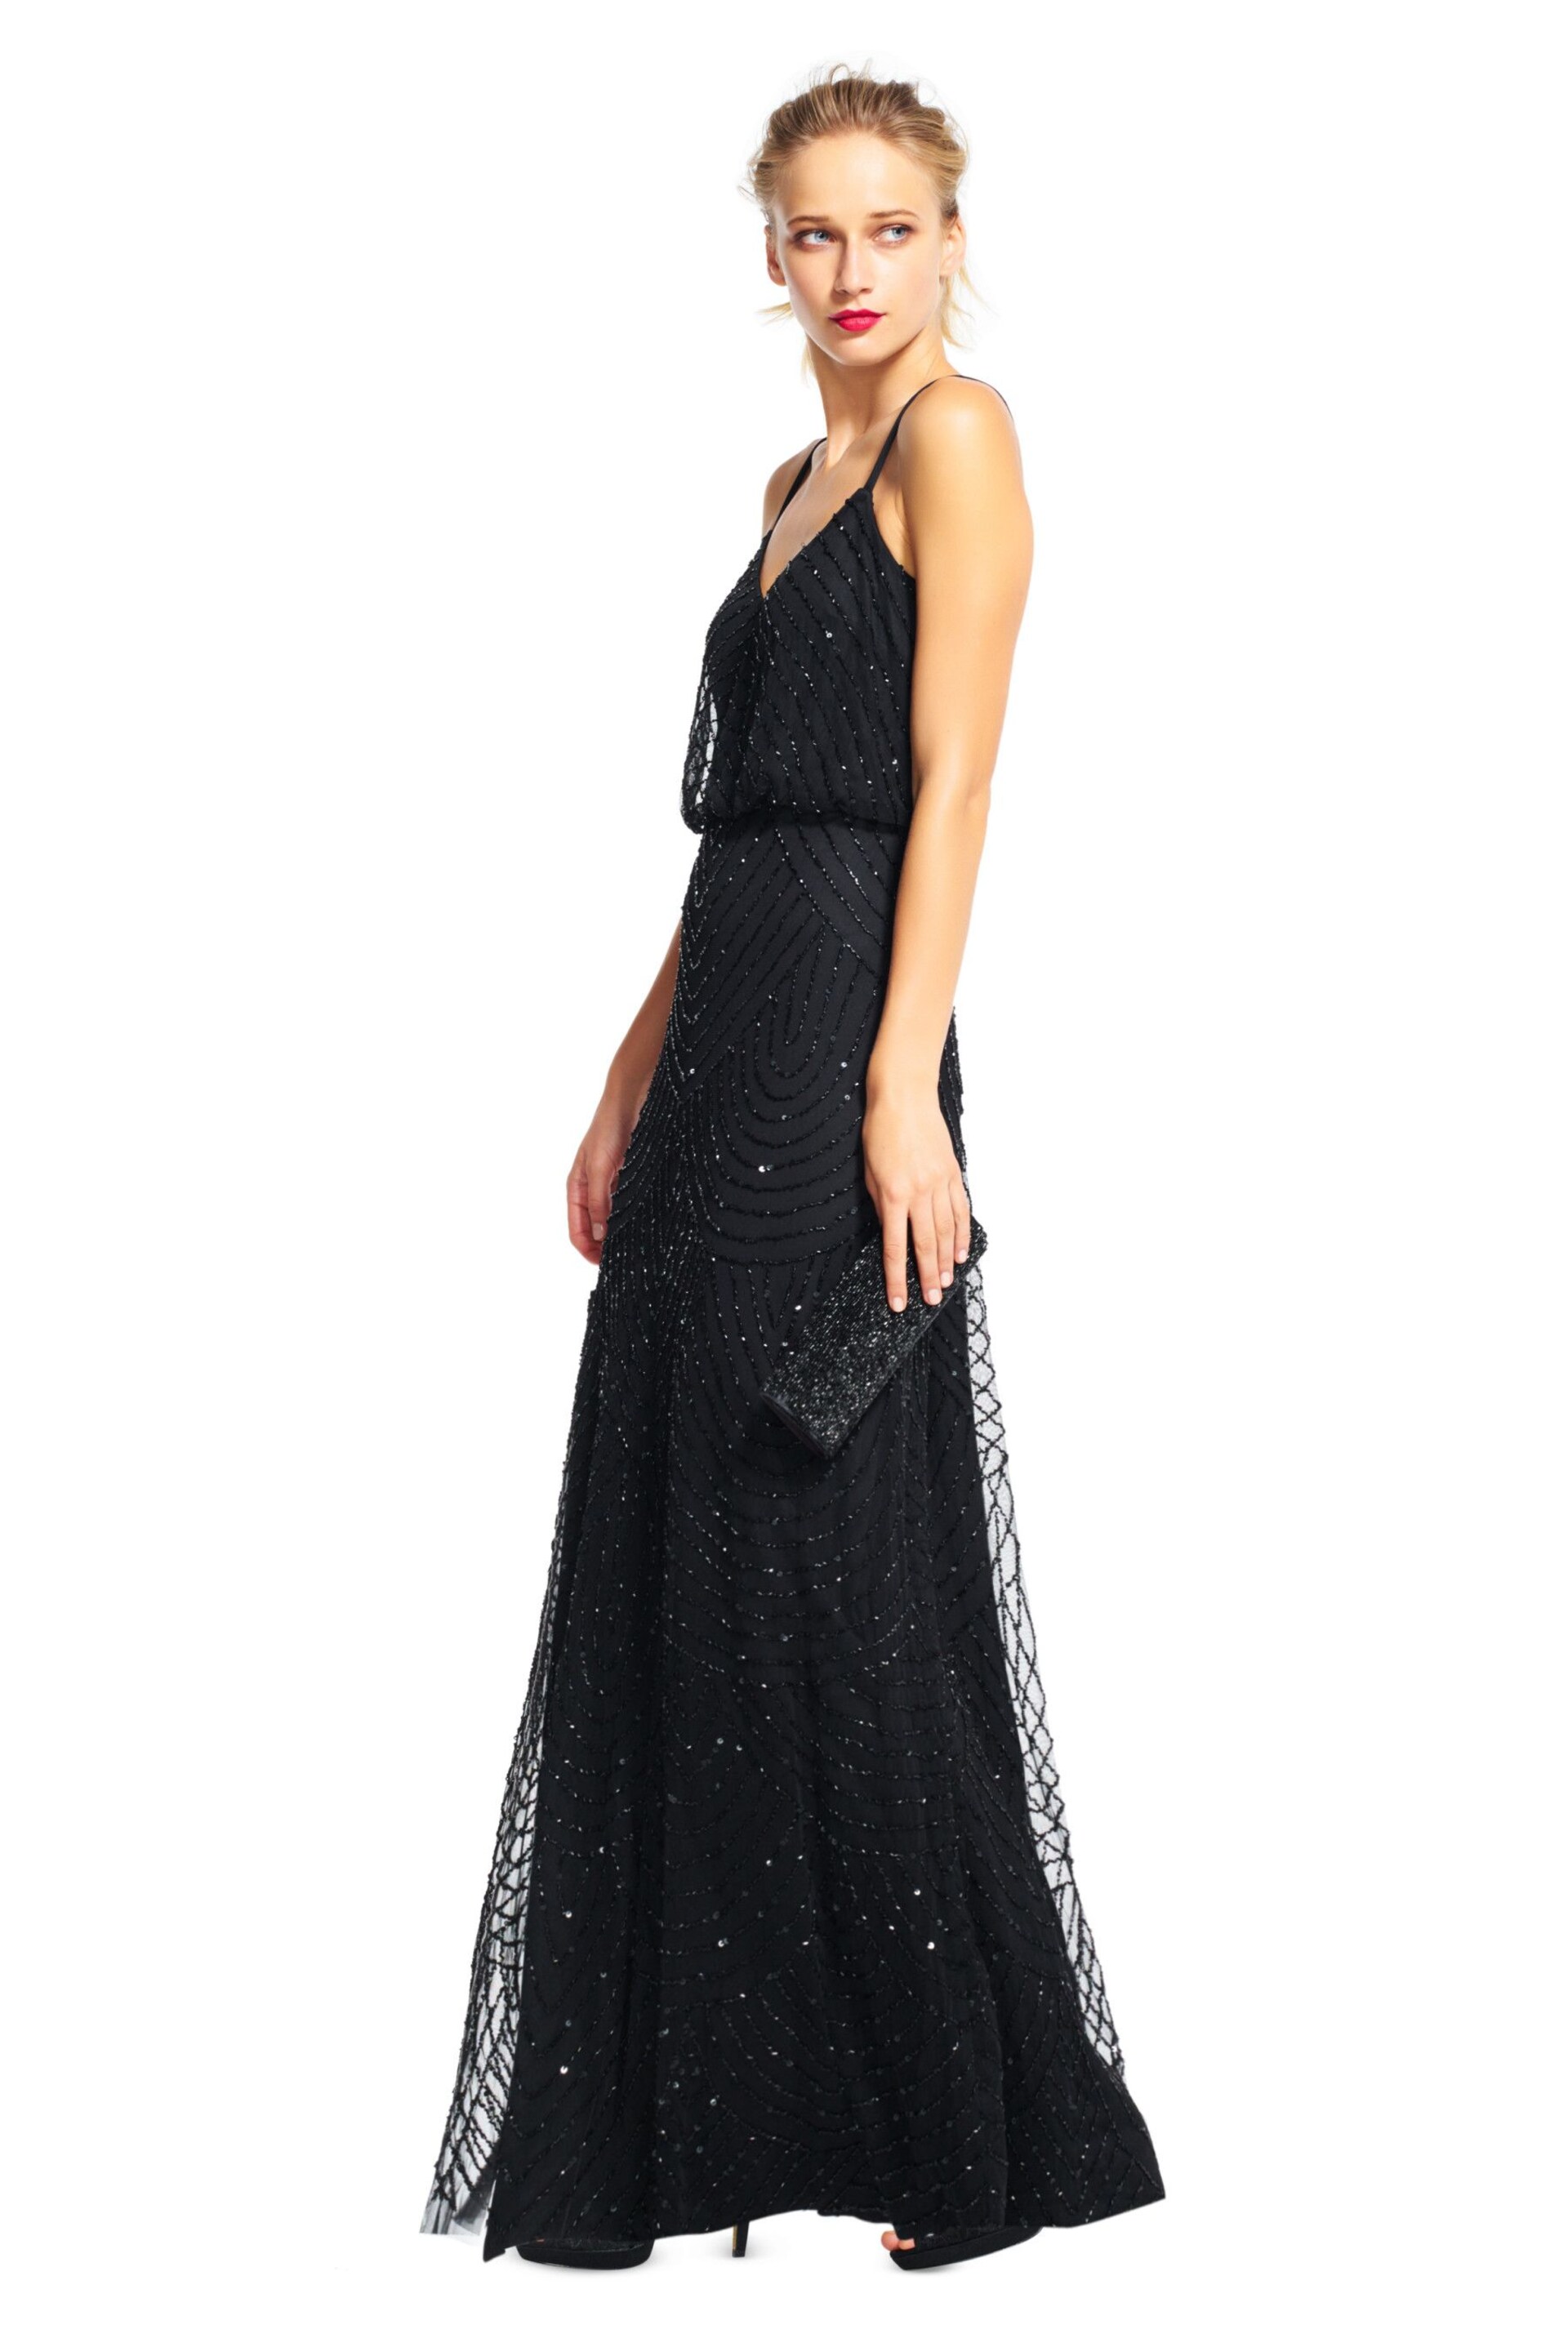 Adrianna Papell Black Blouson Beaded Dress - Image 3 of 5